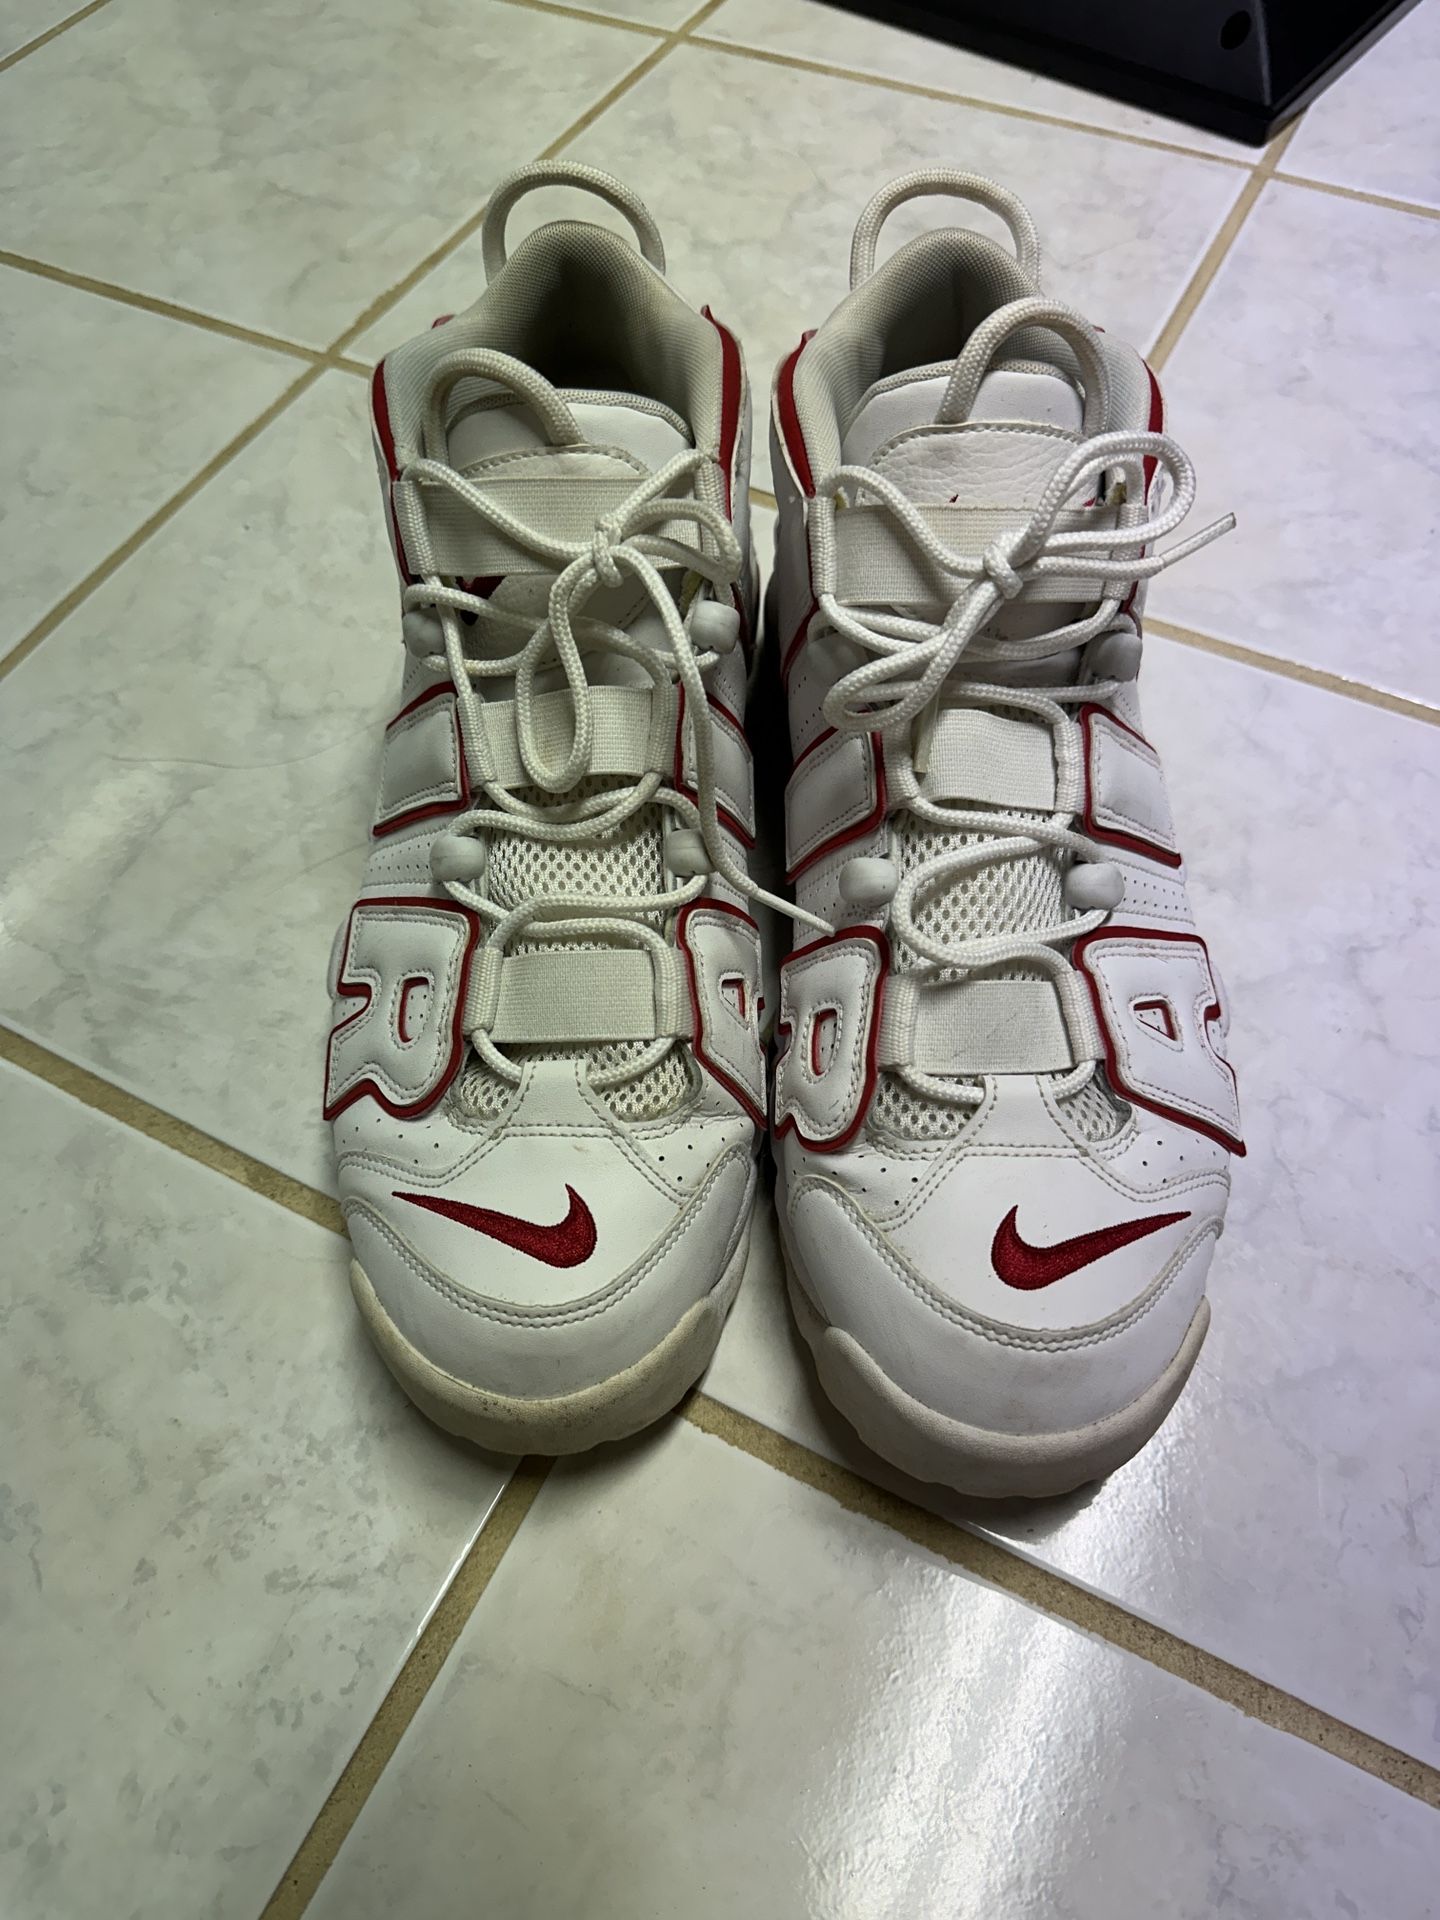 Nike Air More Umptempo High Top Shoes, Size 11.5 Men’s